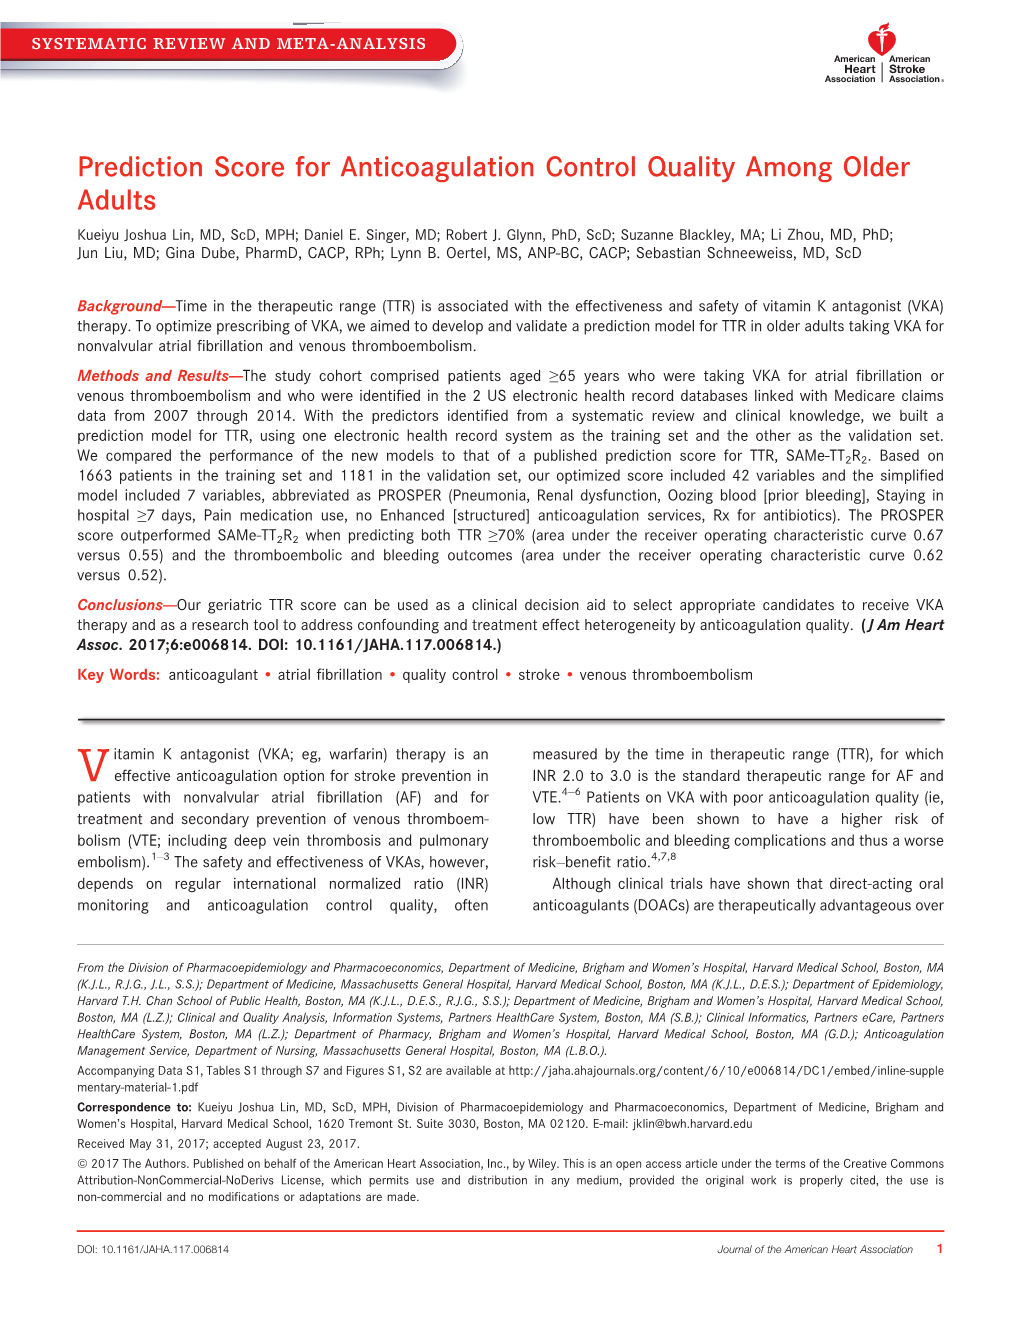 Prediction Score for Anticoagulation Control Quality Among Older Adults Kueiyu Joshua Lin, MD, Scd, MPH; Daniel E